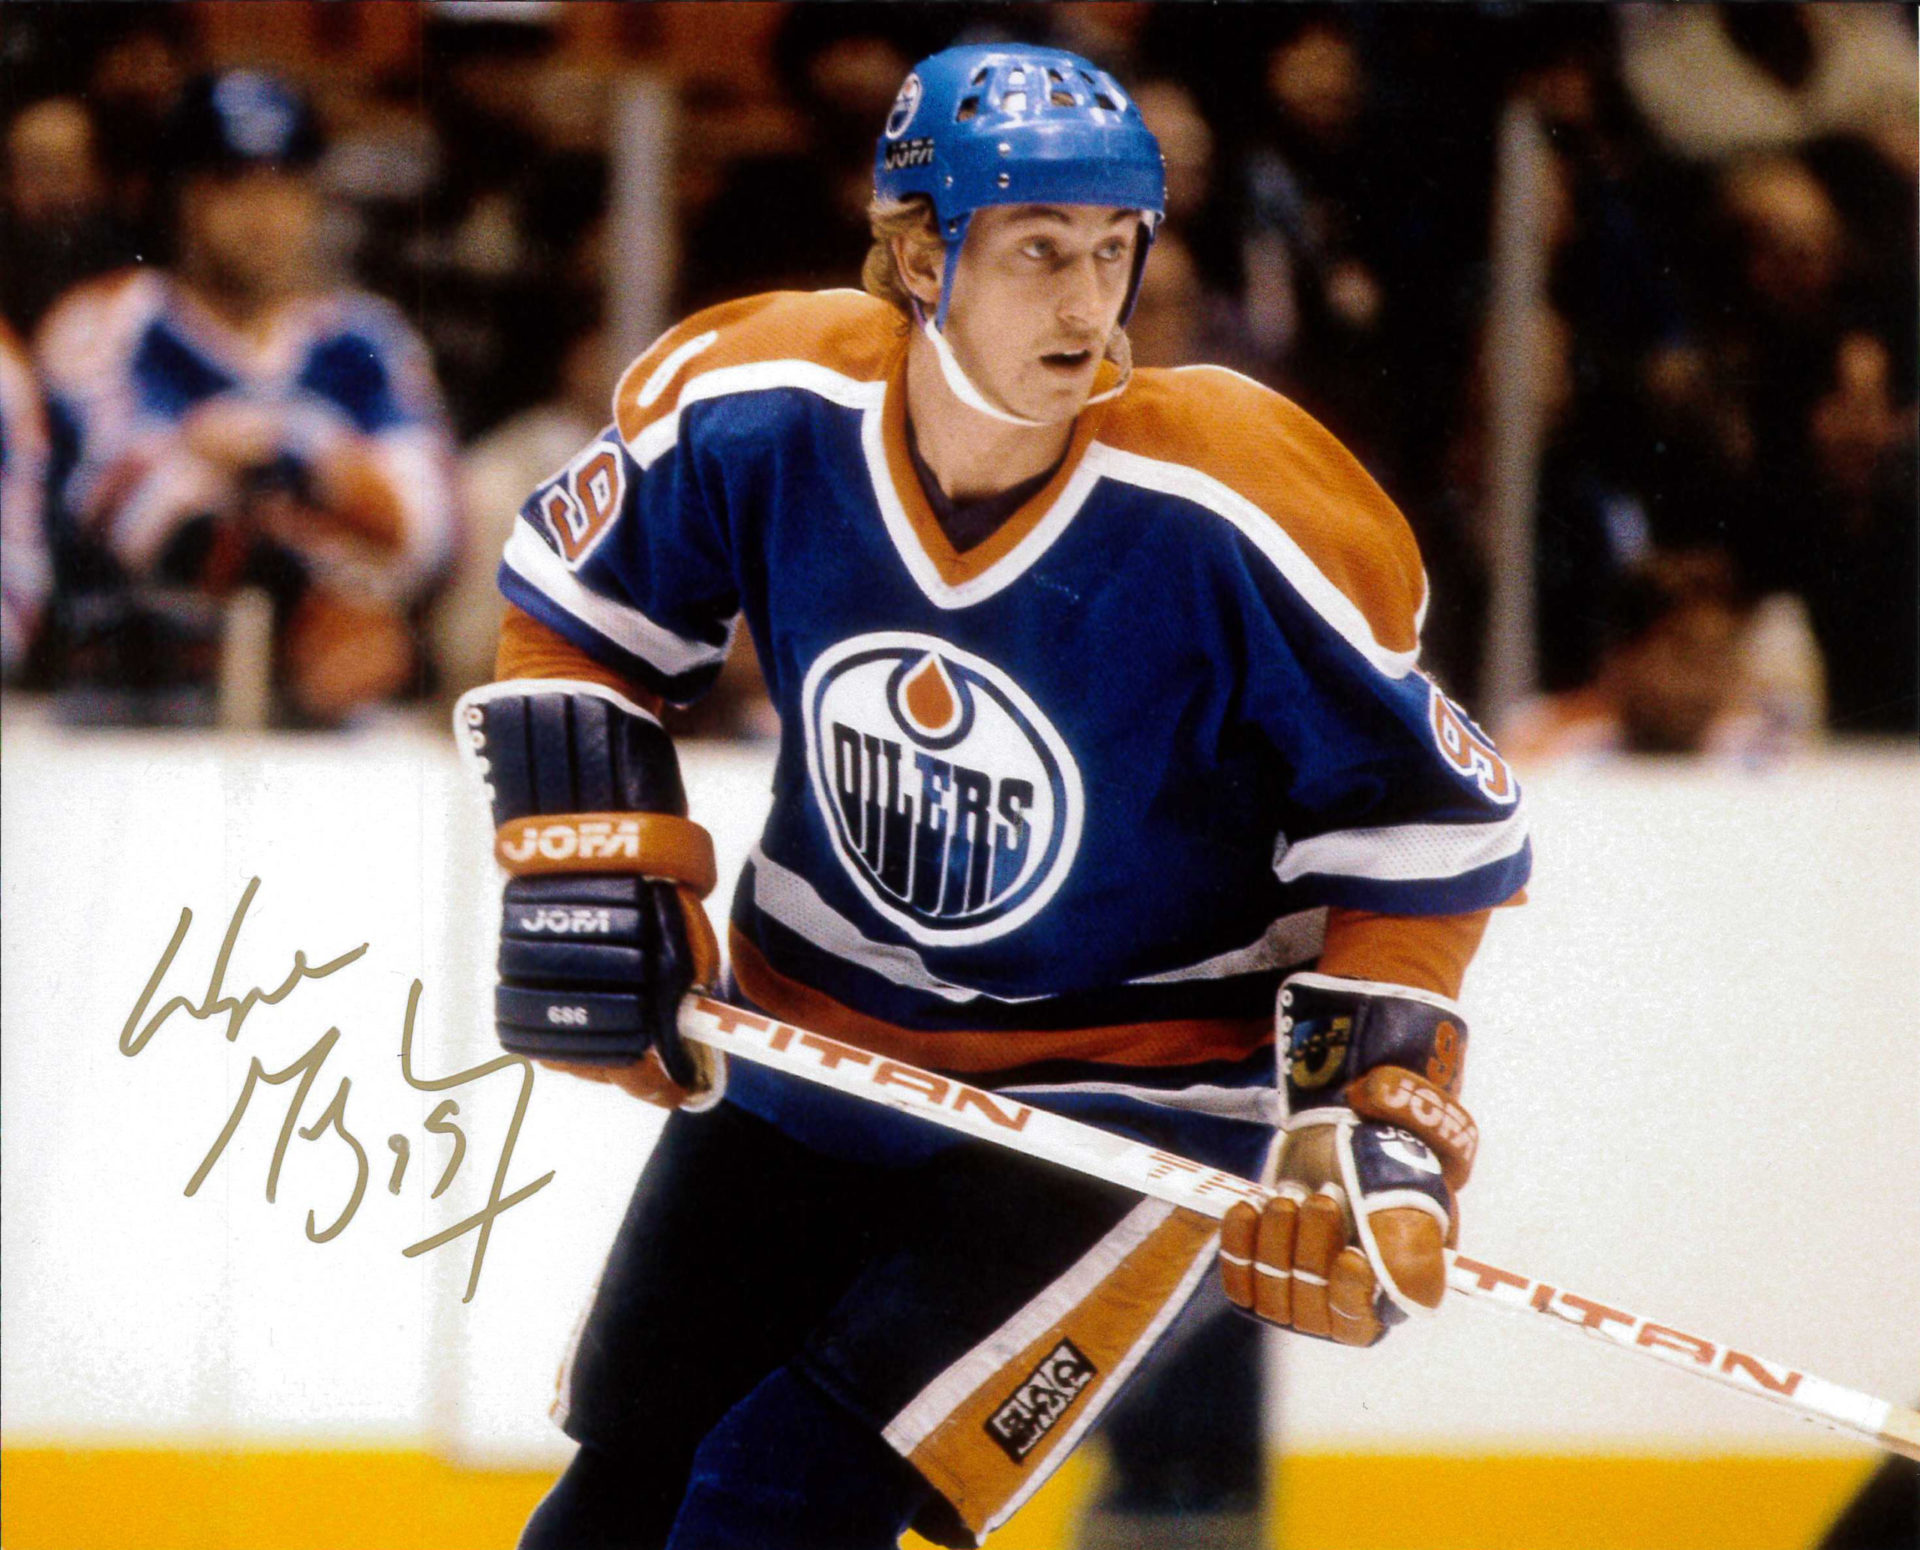 Wayne Gretzky New York Rangers Autographed 16 x 20 Final